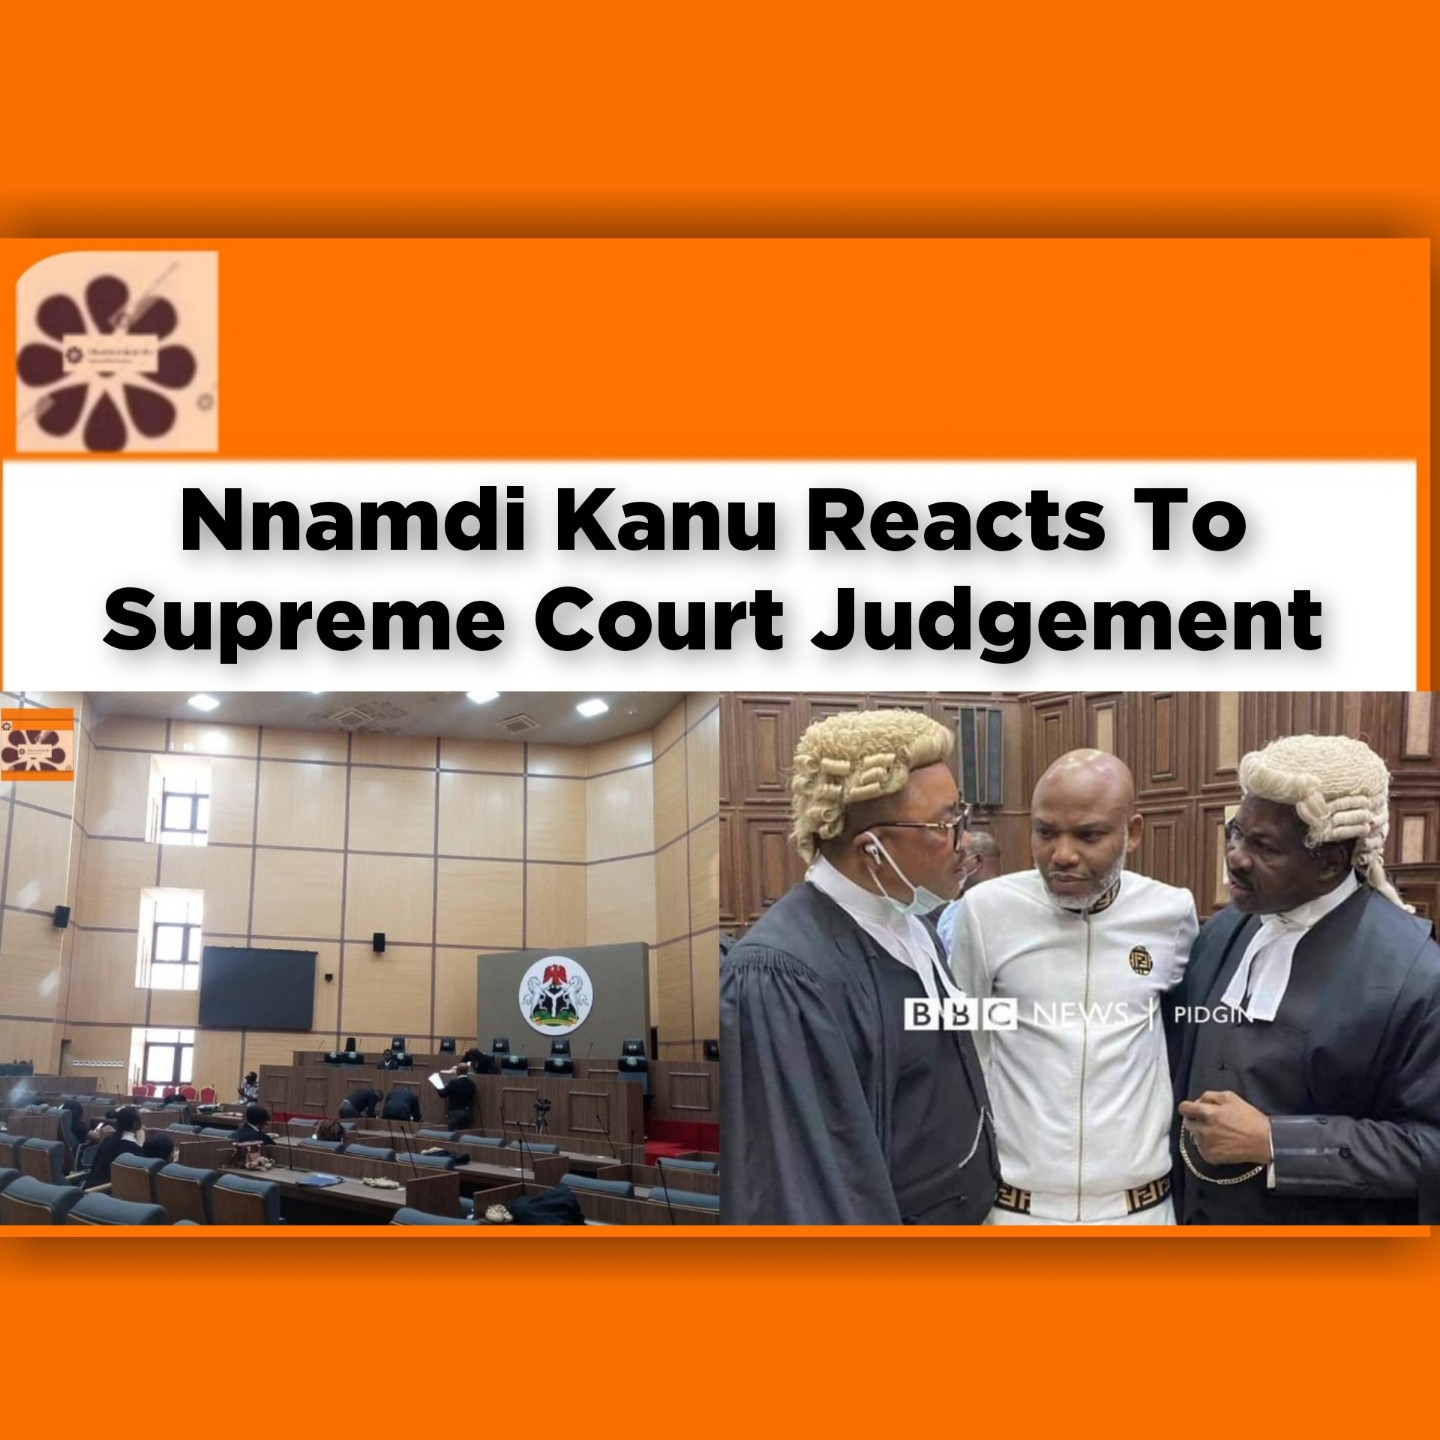 Nnamdi Kanu Reacts To Supreme Court Judgement ~ OsazuwaAkonedo #Biafra #Dss #ipob #Kanu #Nnamdi #SupremeCourt